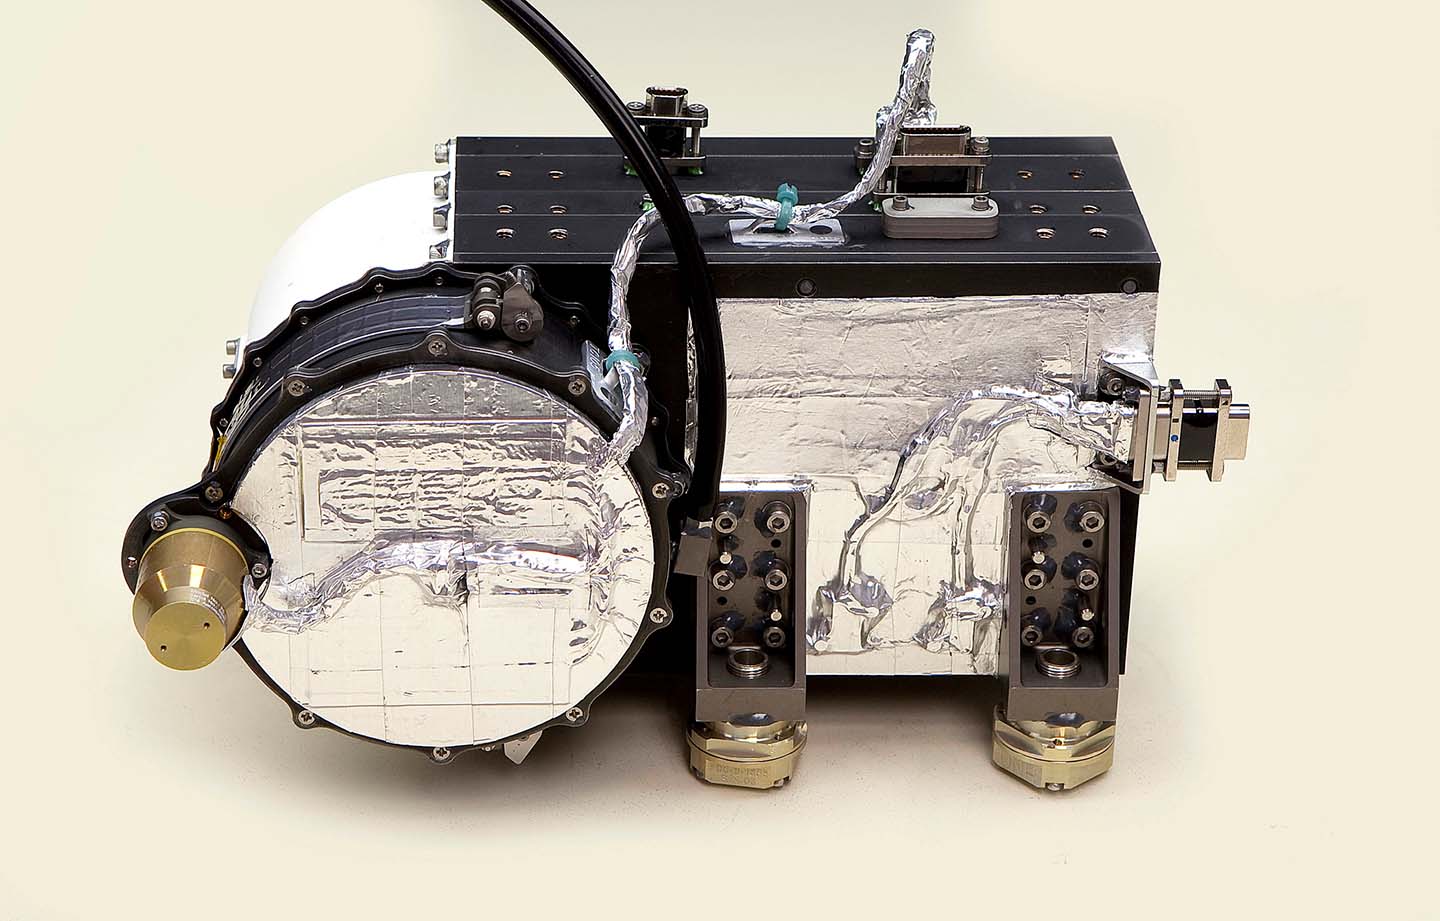 Jupiter Energetic Particle Detector Instrument (JEDI) units